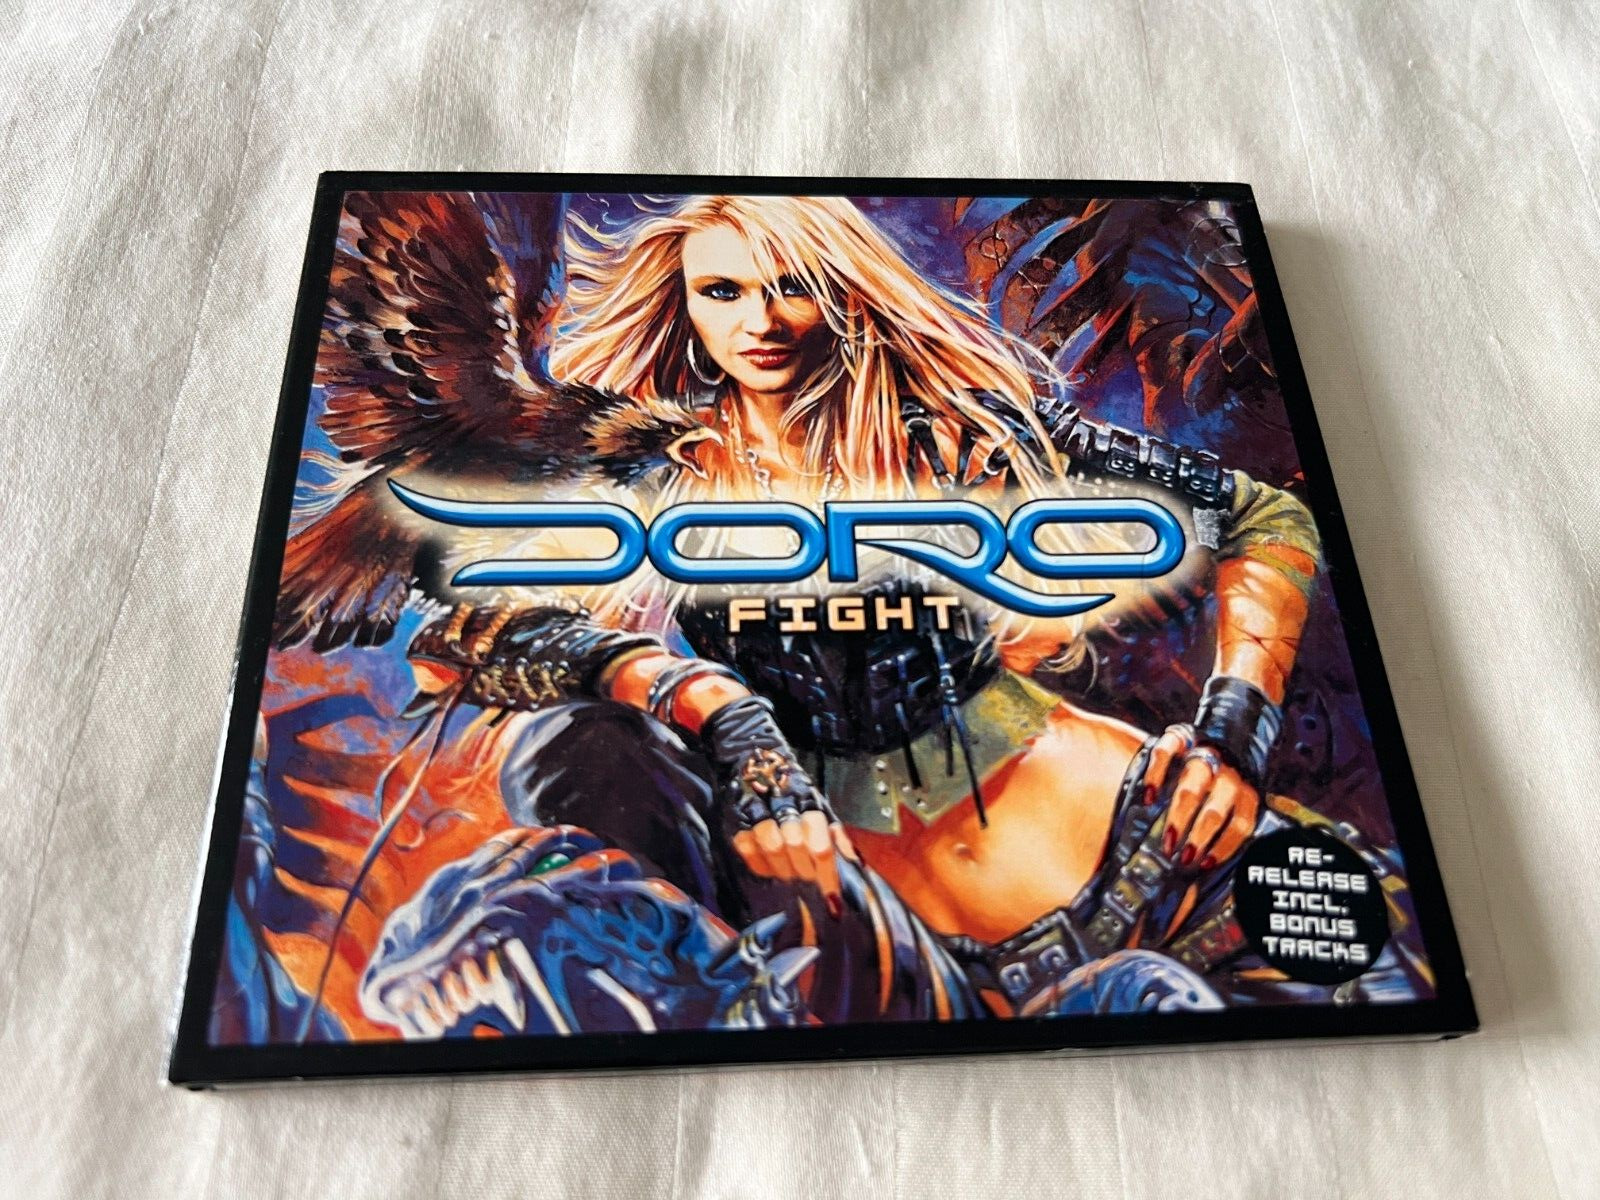 Doro - Fight CD 2010 SPV Import Germany Bonus Tracks Warlock 80s Metal OOP RARE